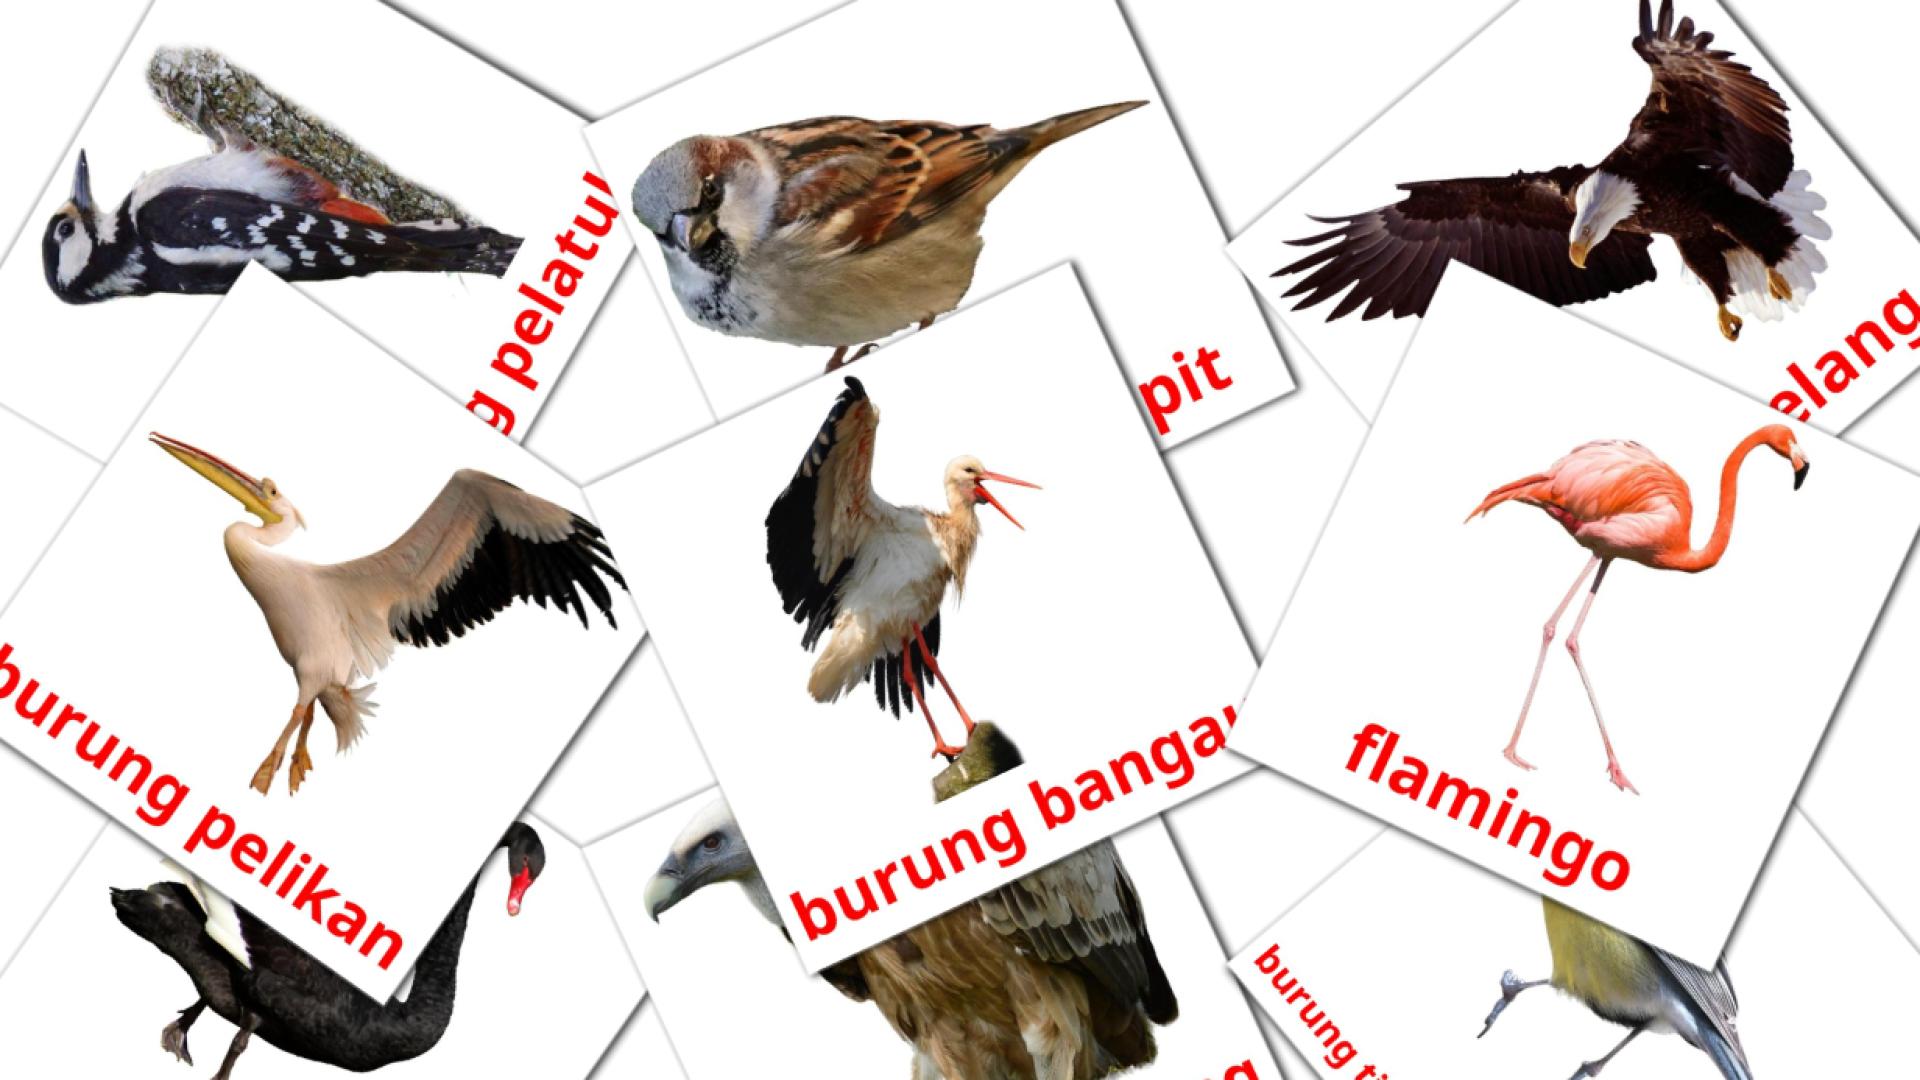 18 Burung liar flashcards